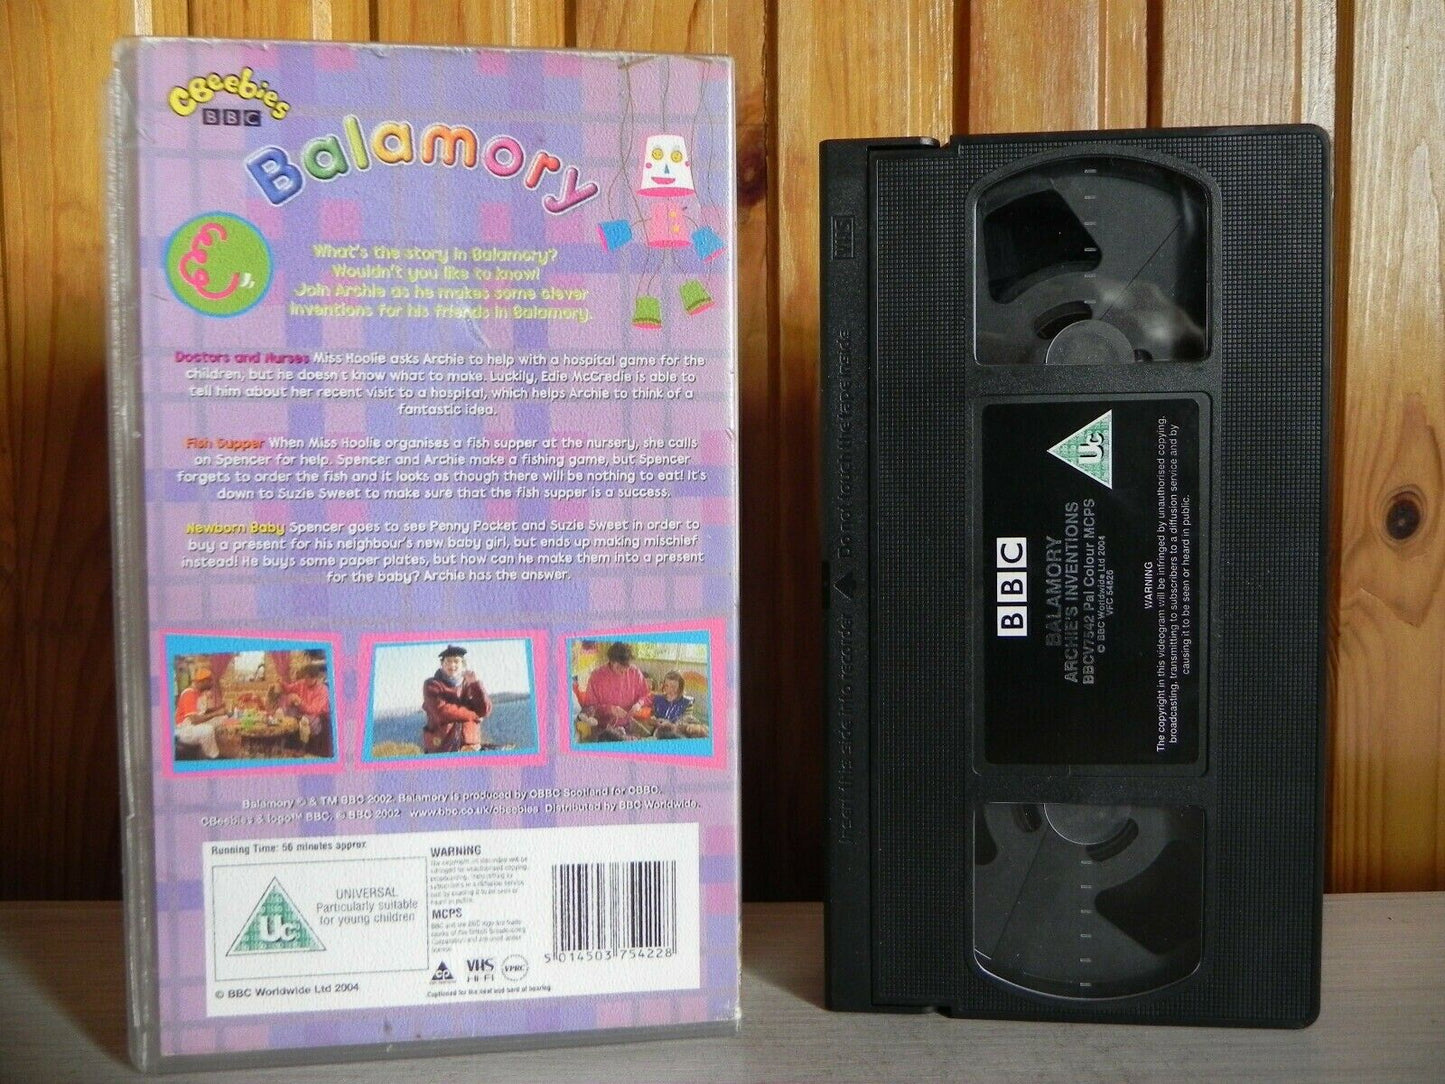 Balamory - Archie's Inventions - BBC - Three Episodes - Adventure - Kids - VHS-